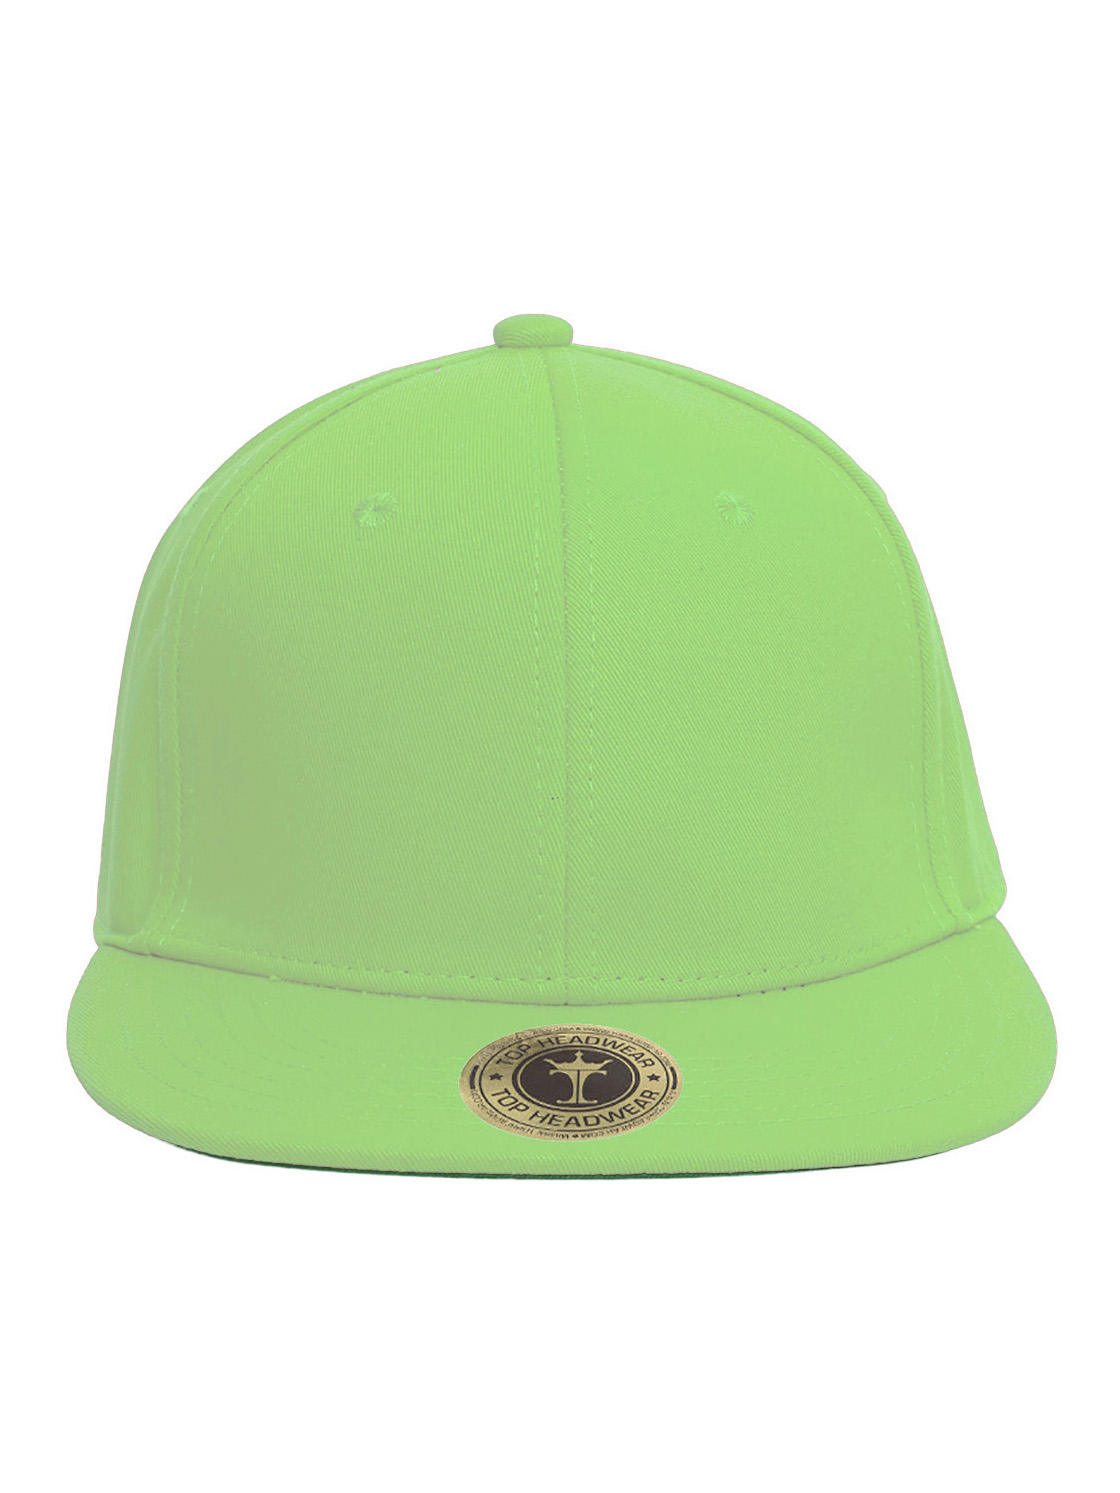 Top Headwear Plain Flat Bill Fitted Hat, Neon Green 7 3/8 - image 2 of 4